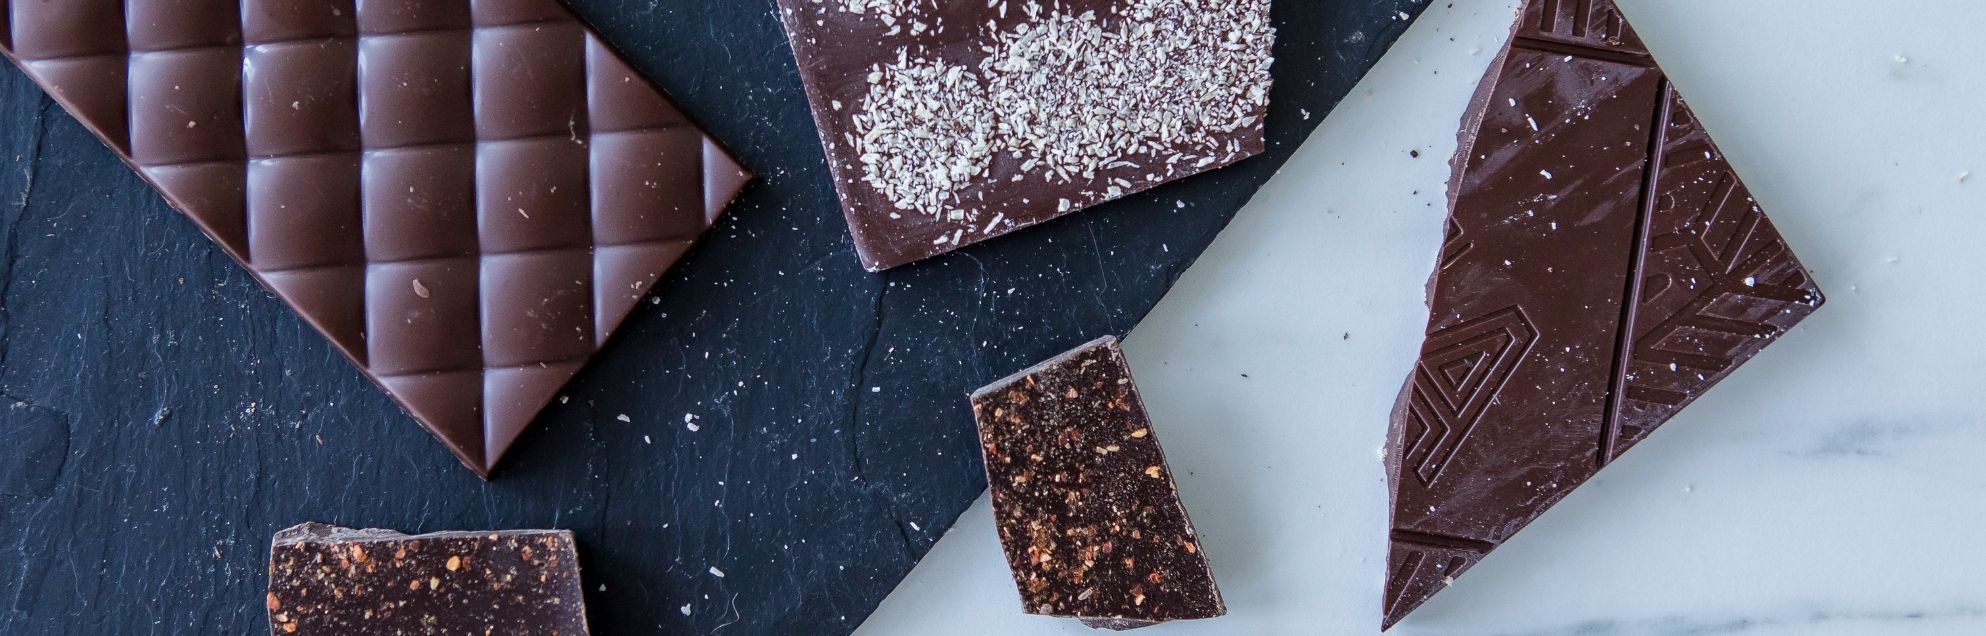 Les chocolats originaux – Raconte Moi un Chocolat